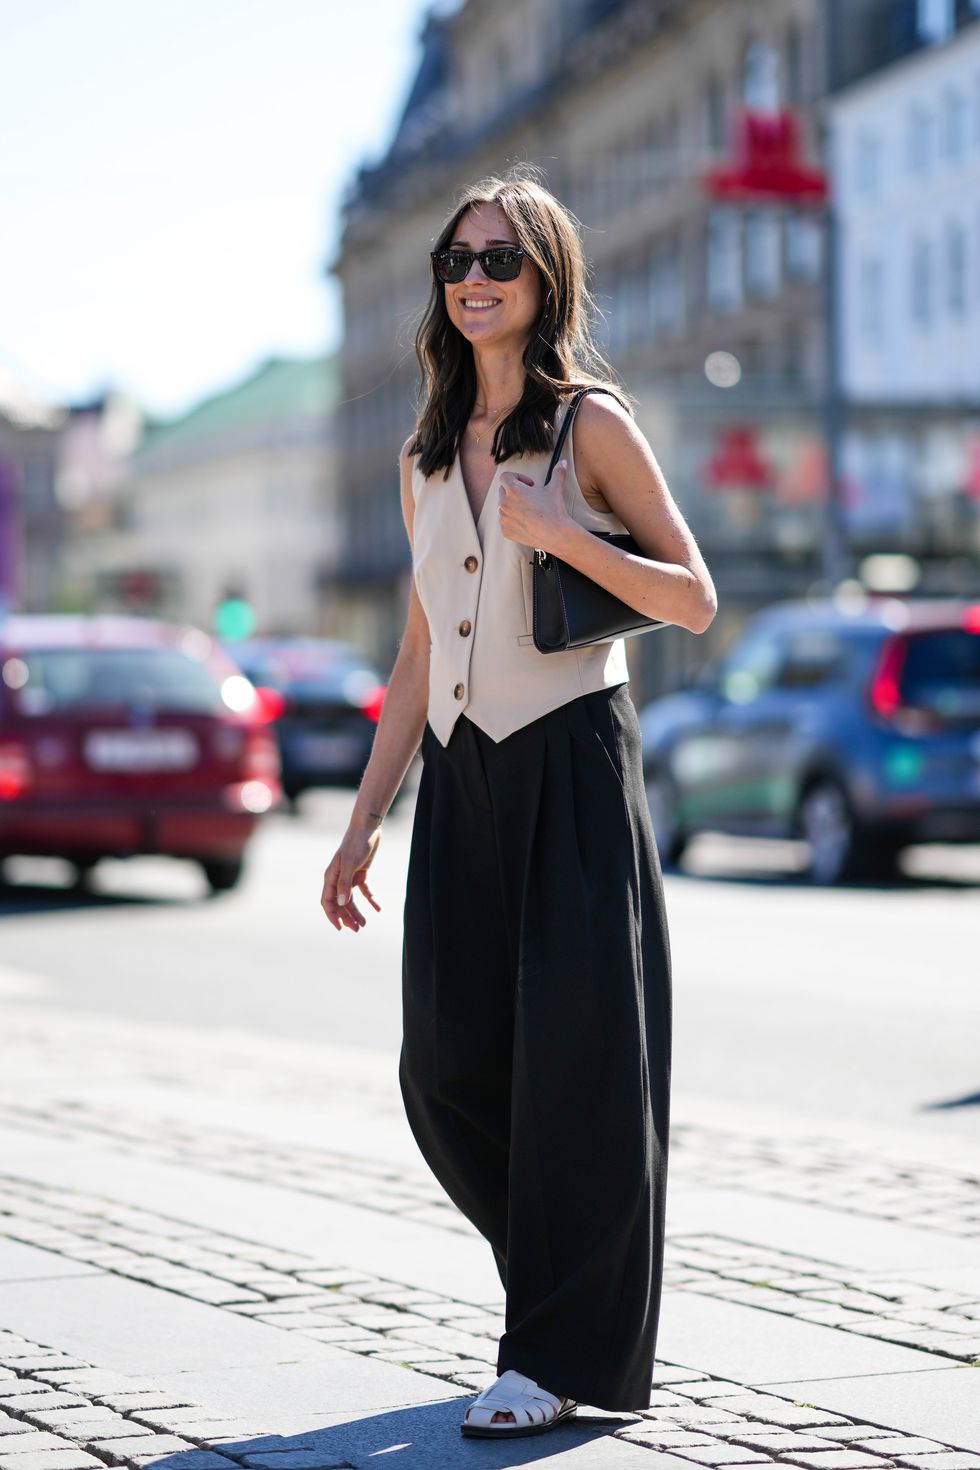 20 City Outfit Ideas for Summer, via Blogger ift.tt/2ARaSff…